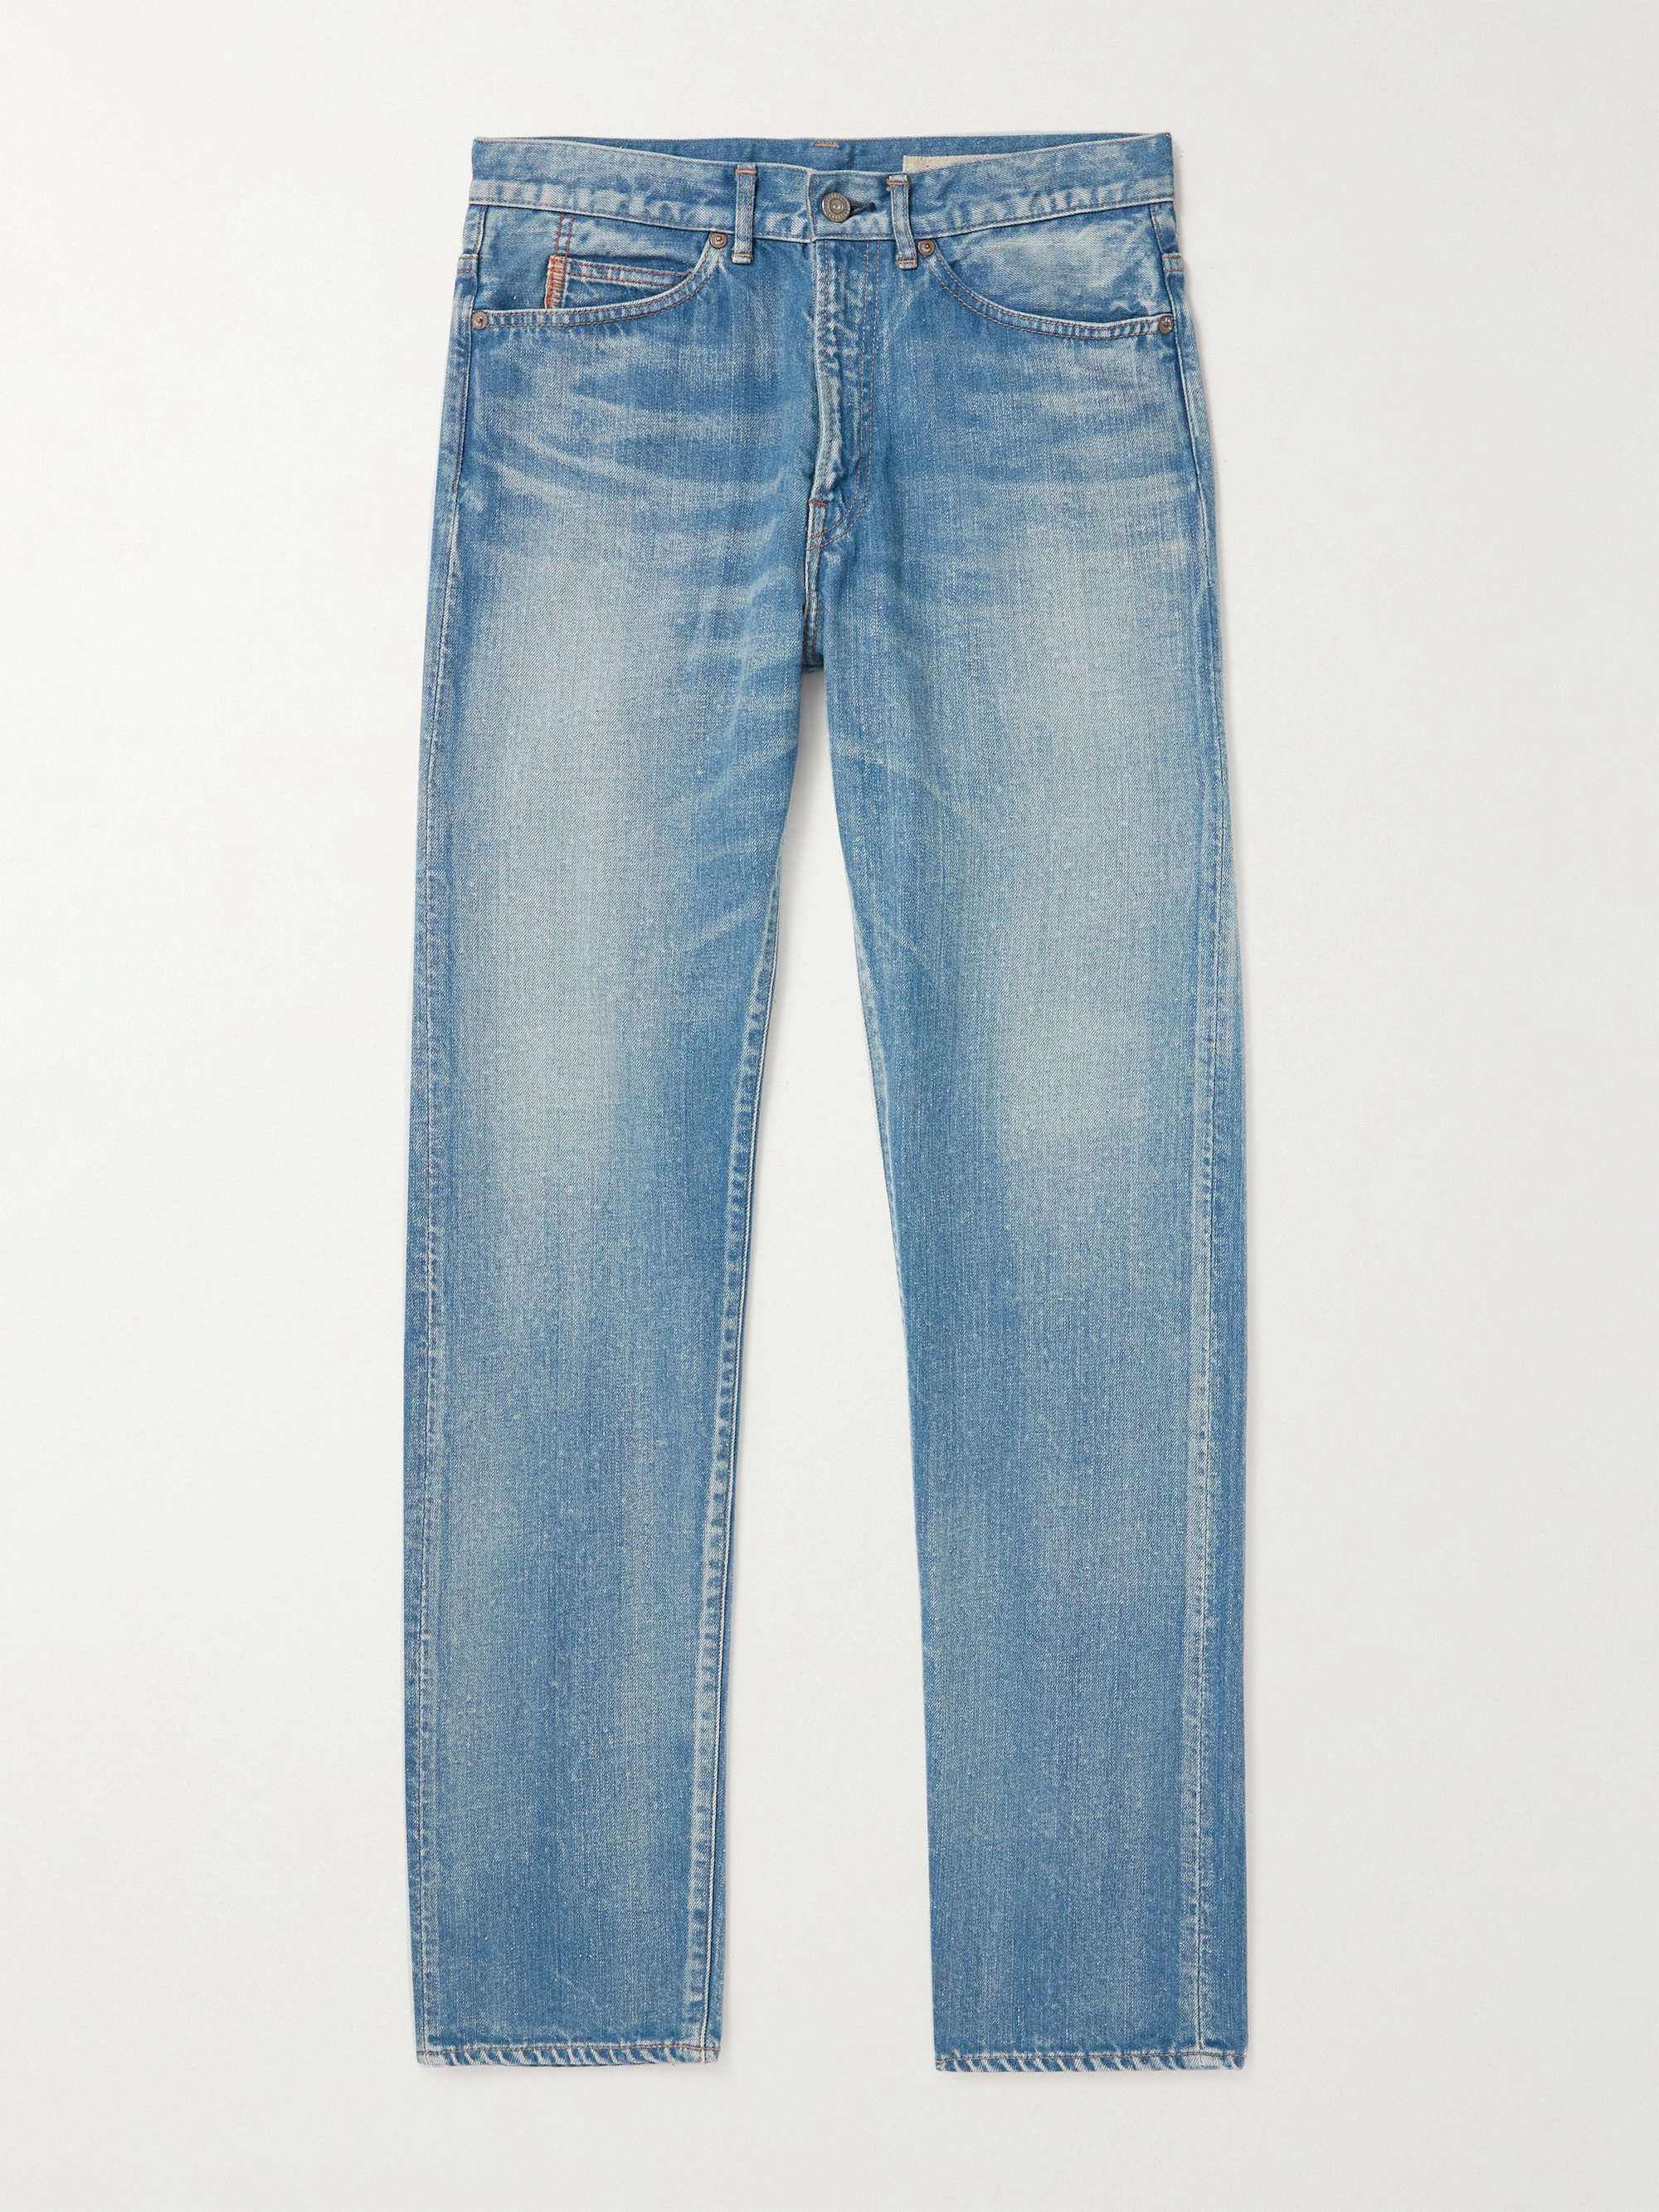 COTTLE Slim-Fit Distressed Selvedge Jeans